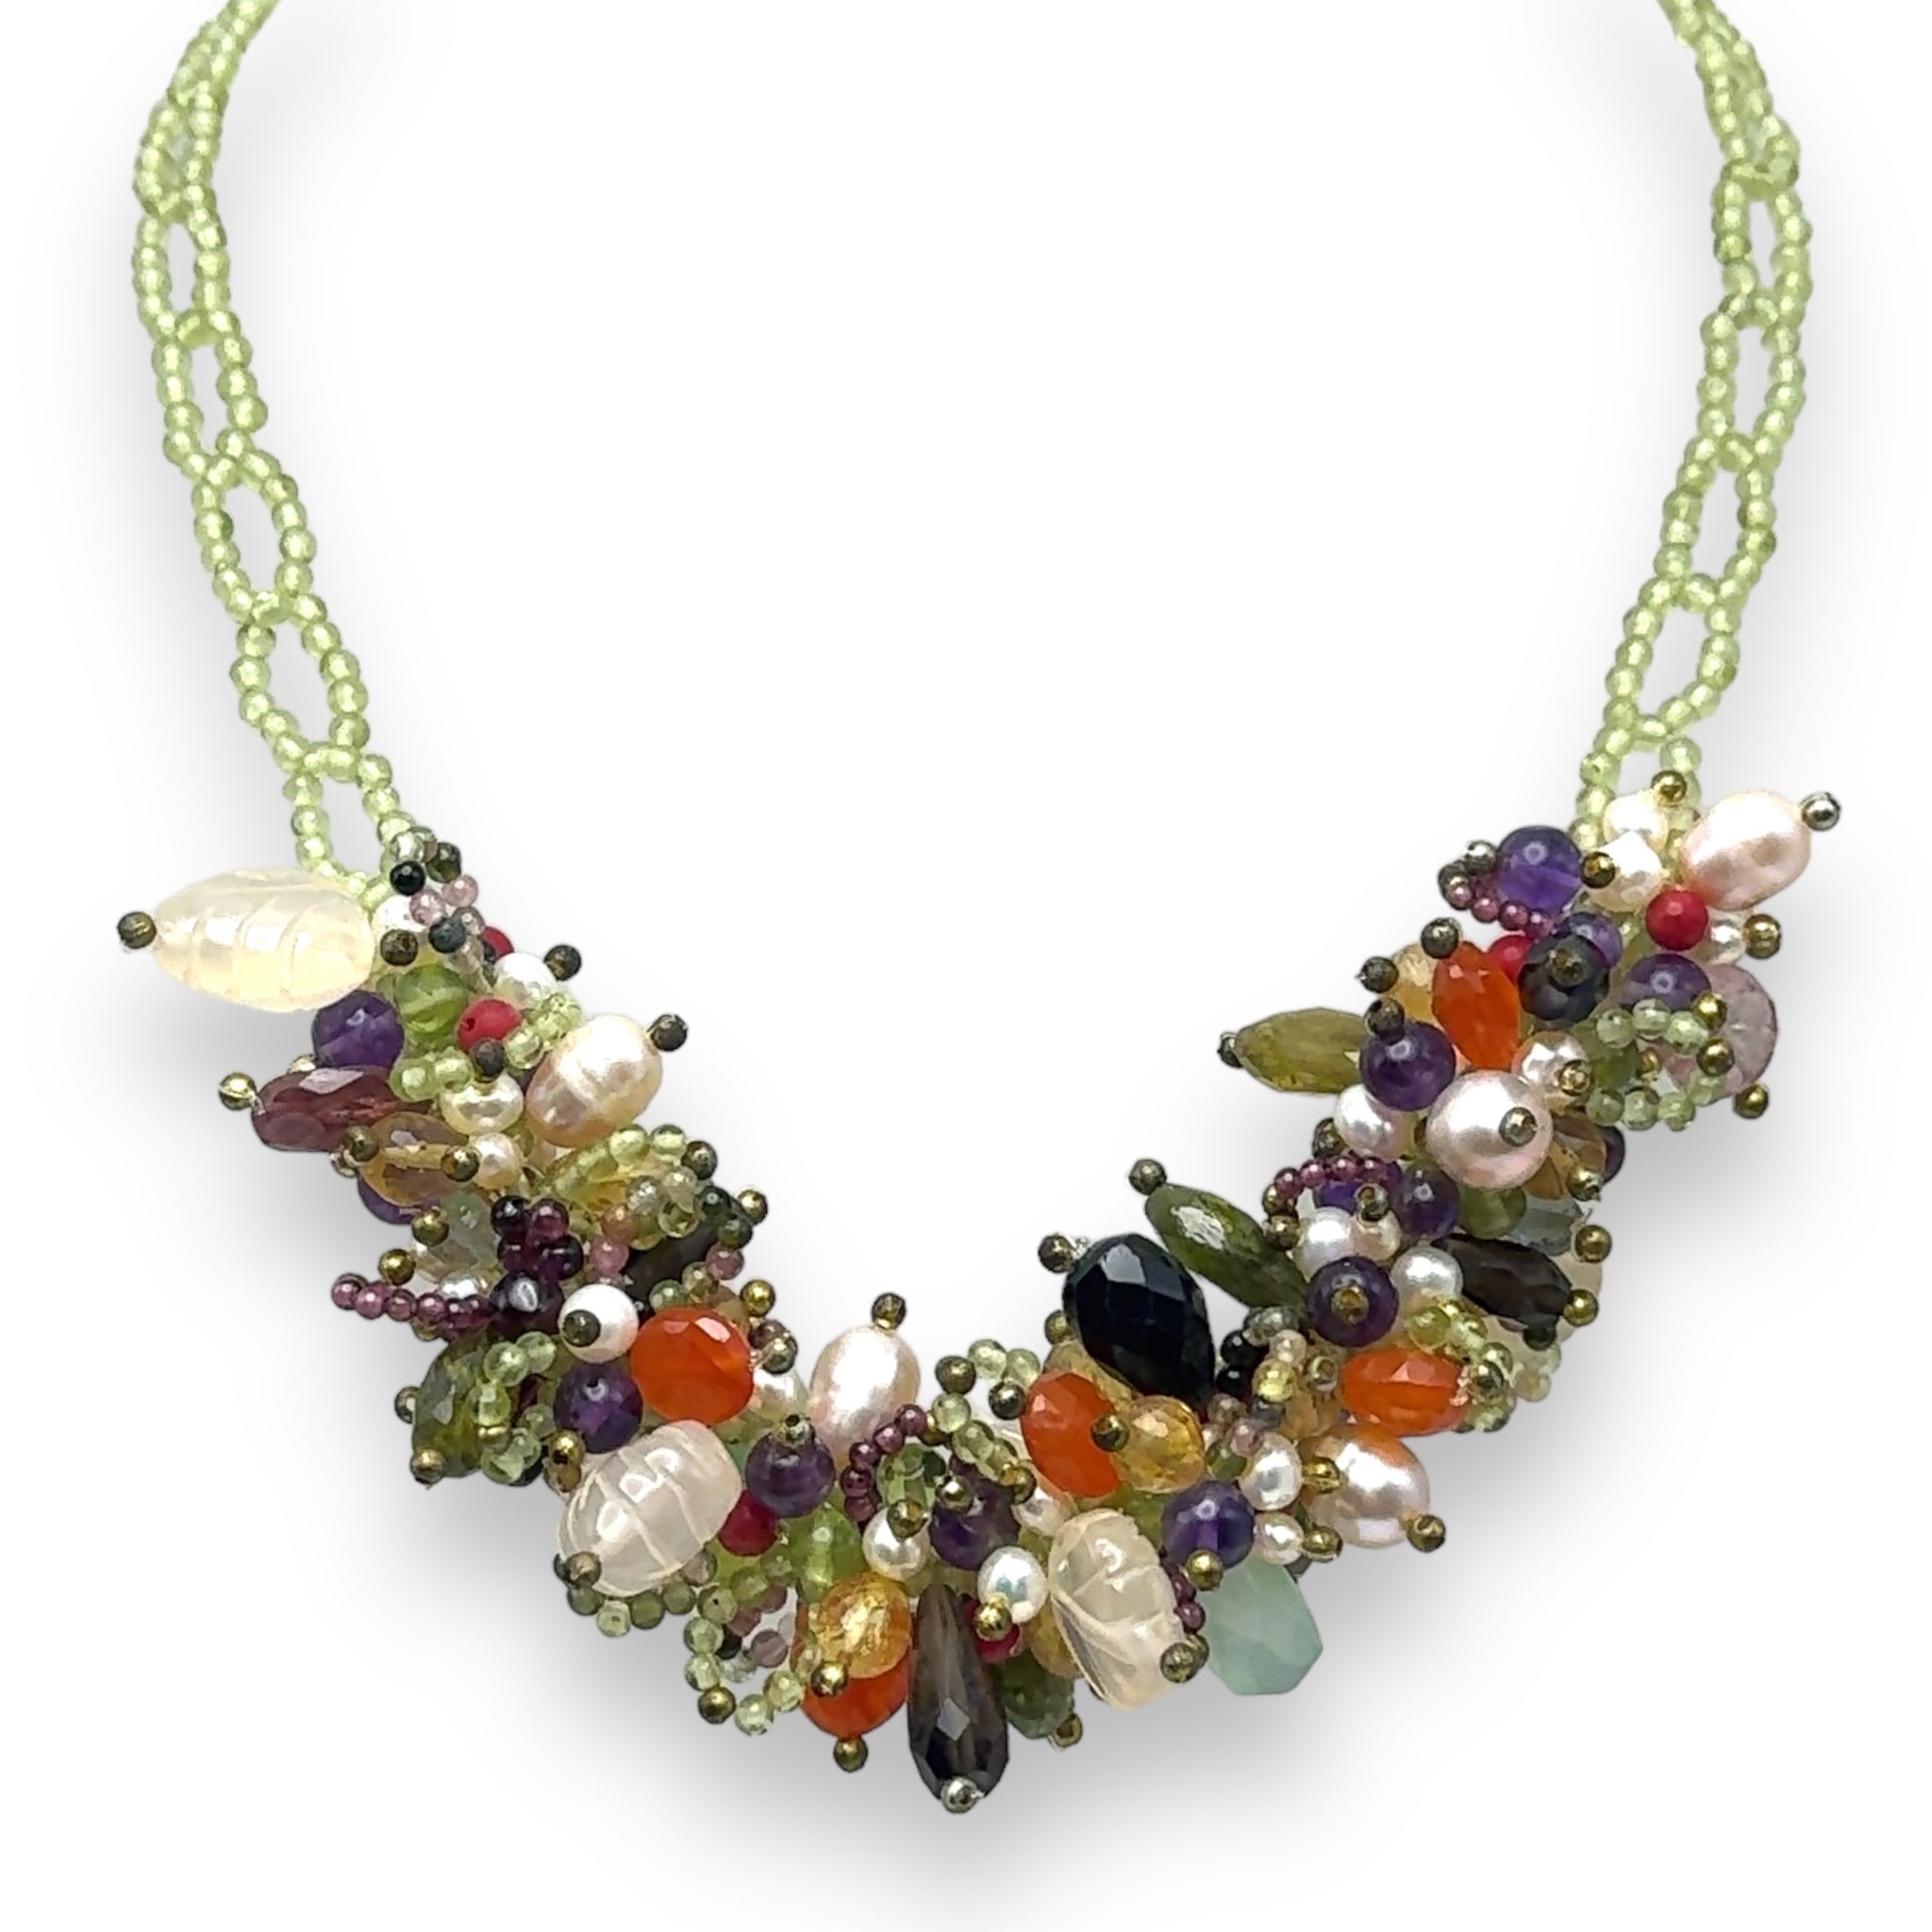 Natural Handmade Necklace 16"-18" Multi Semiprecious Stones - Peridot, Pearls, Garnet, Carnelian Gemstone Beads Jewellery